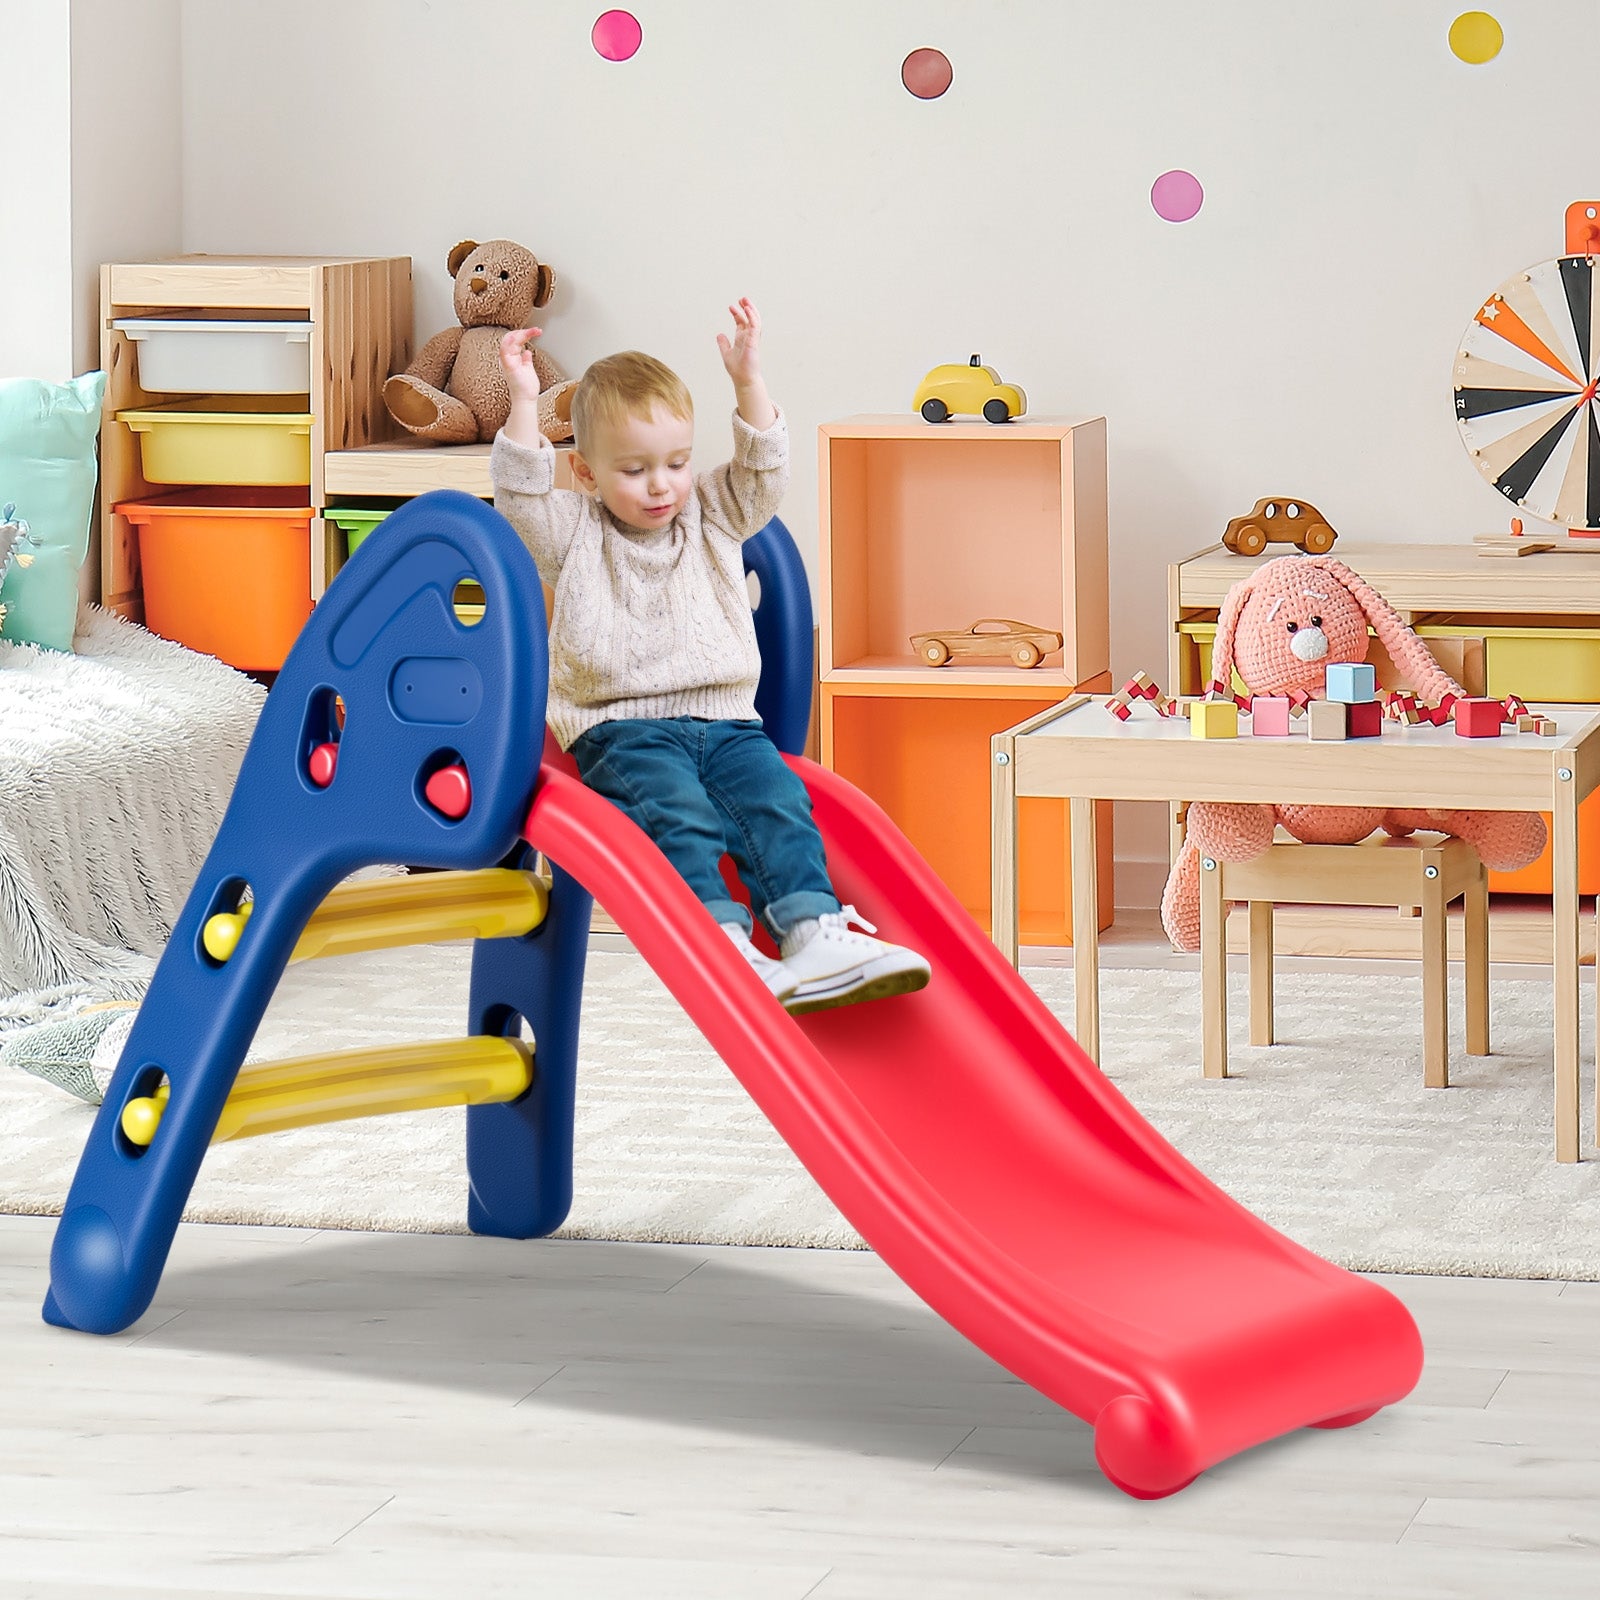 2-step Folding Plastic Toy Slide for Kids